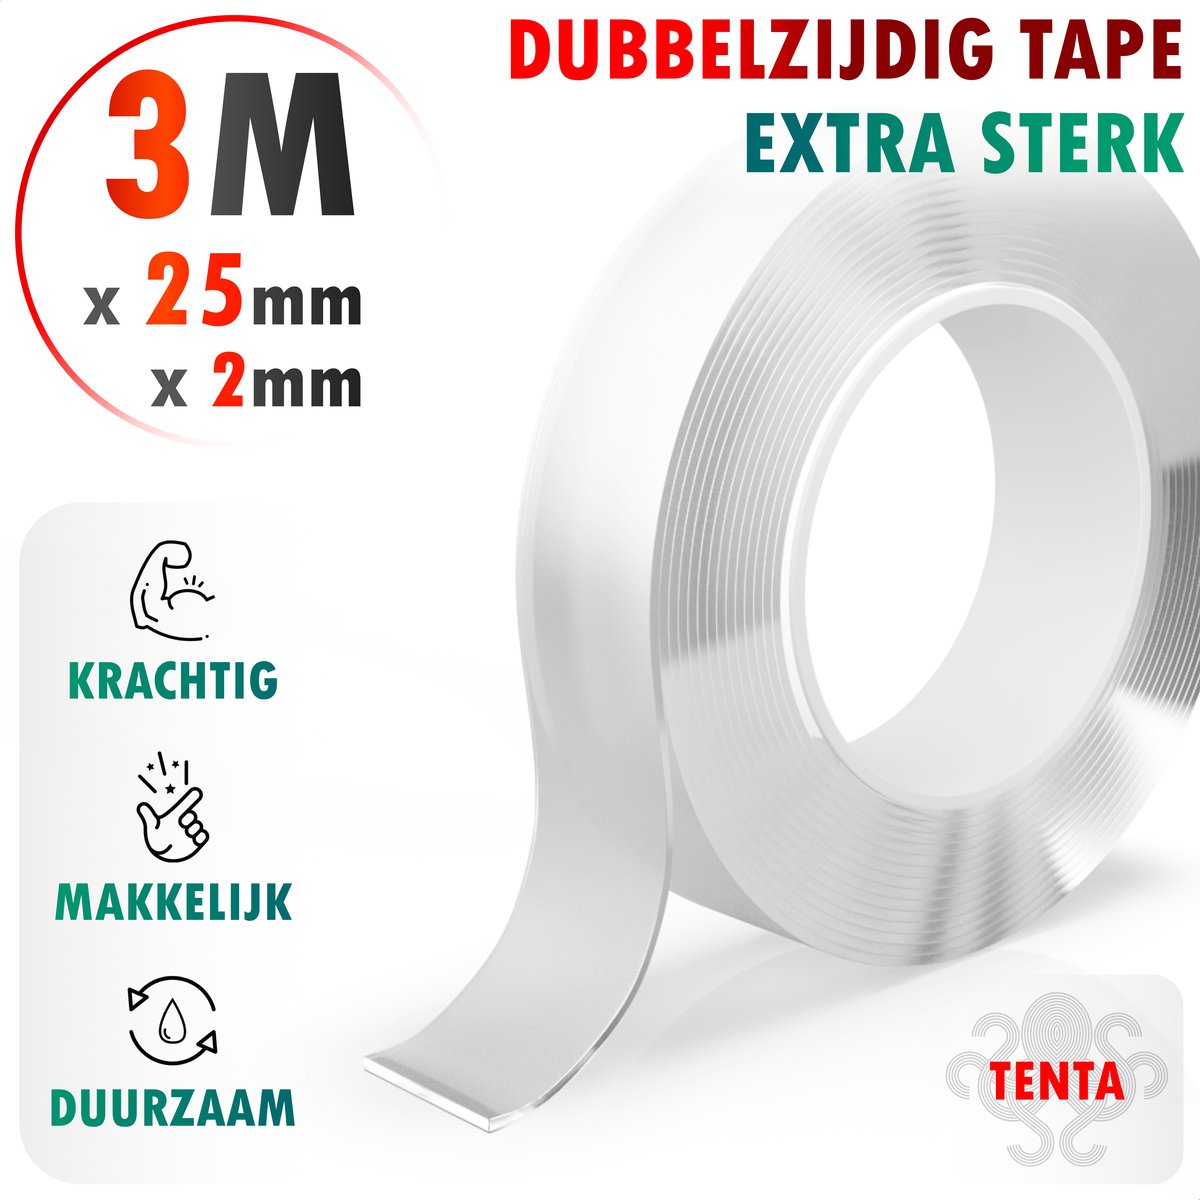 TENTA® Dubbelzijdig Tape Extra Sterk - 3m x 25mm x 2mm - TENTA®